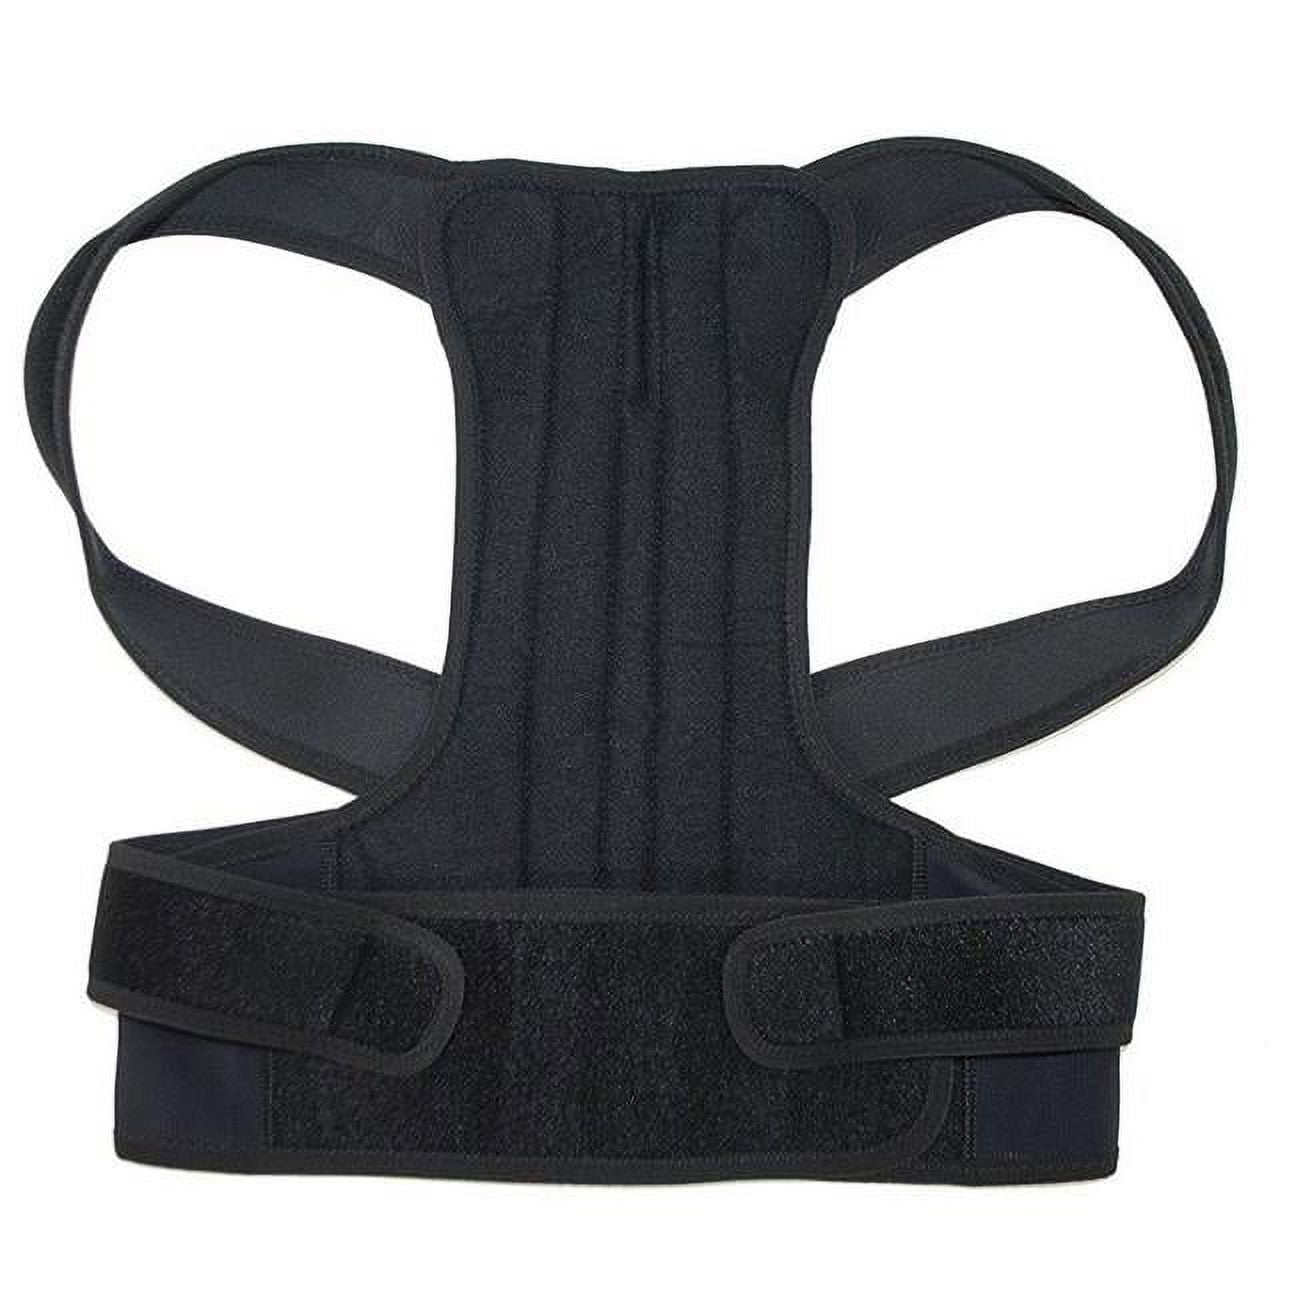 Support Straight & Relieve Upper Back Pain With Better Posture Belt Along Lower Back Shoulder Waist, Black - 2xl